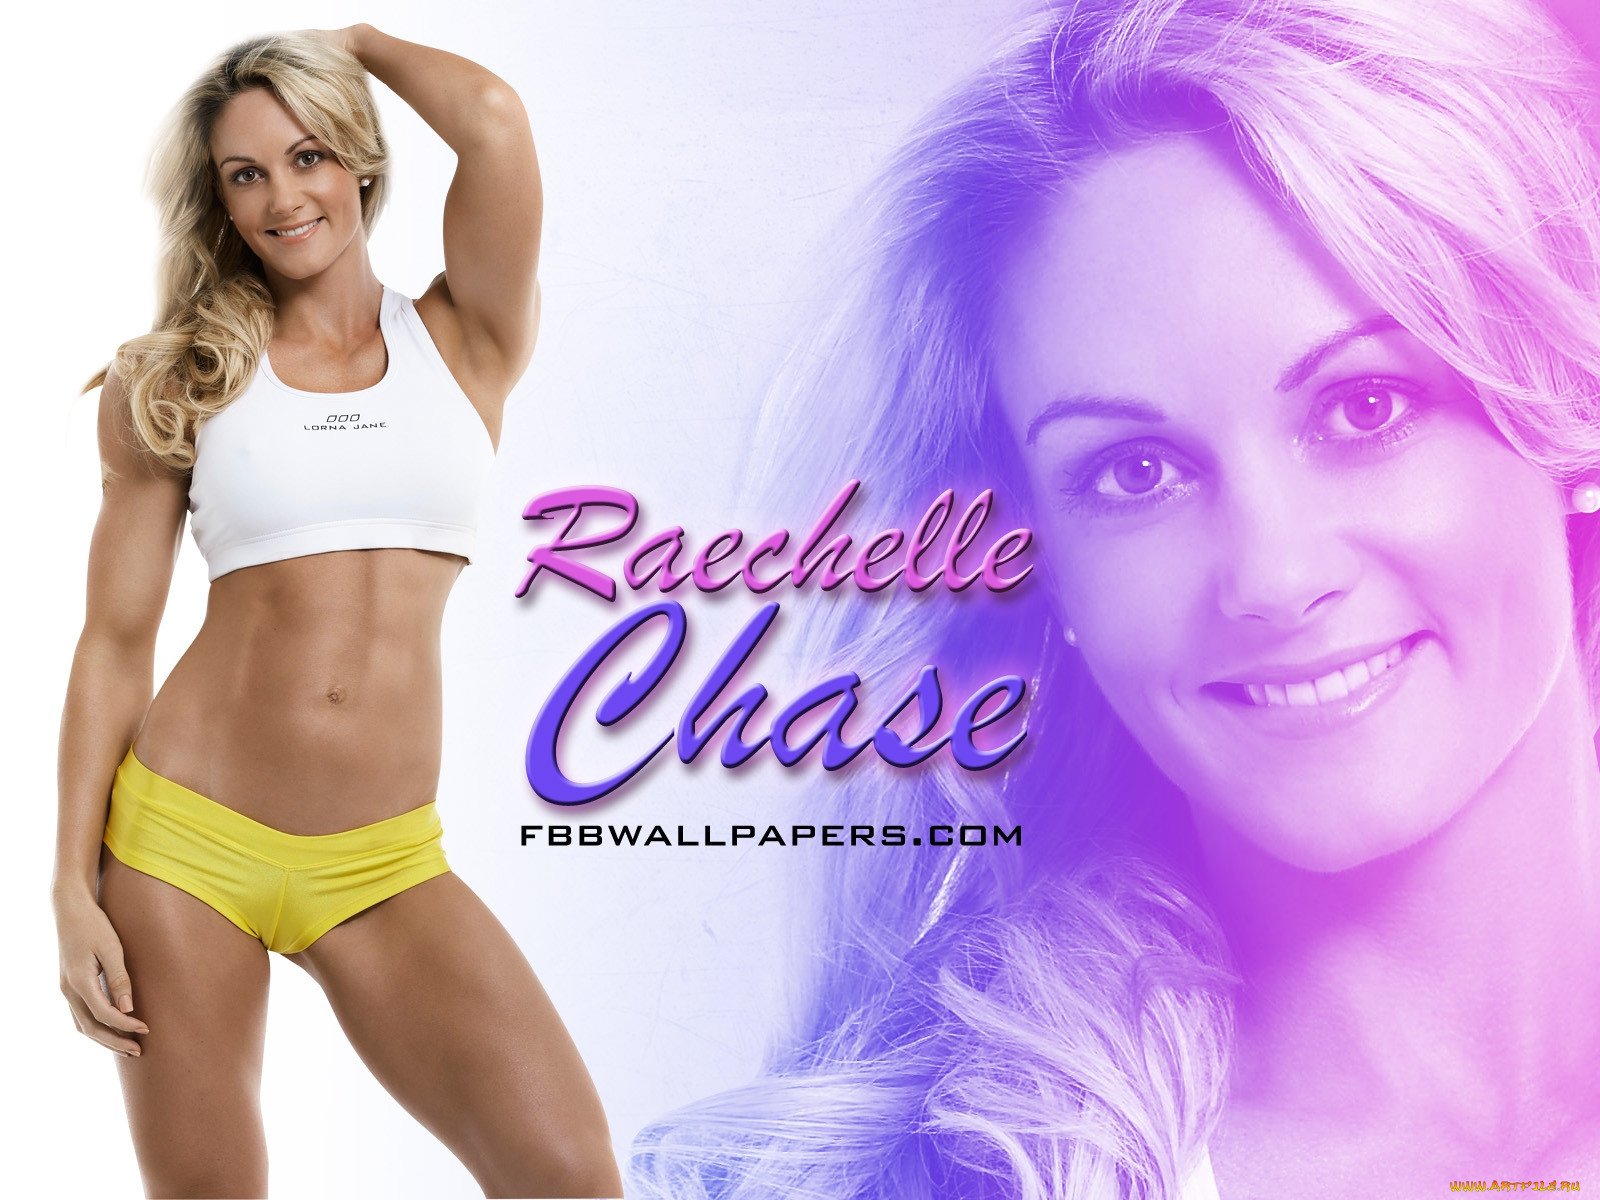 Raechelle Chase, 